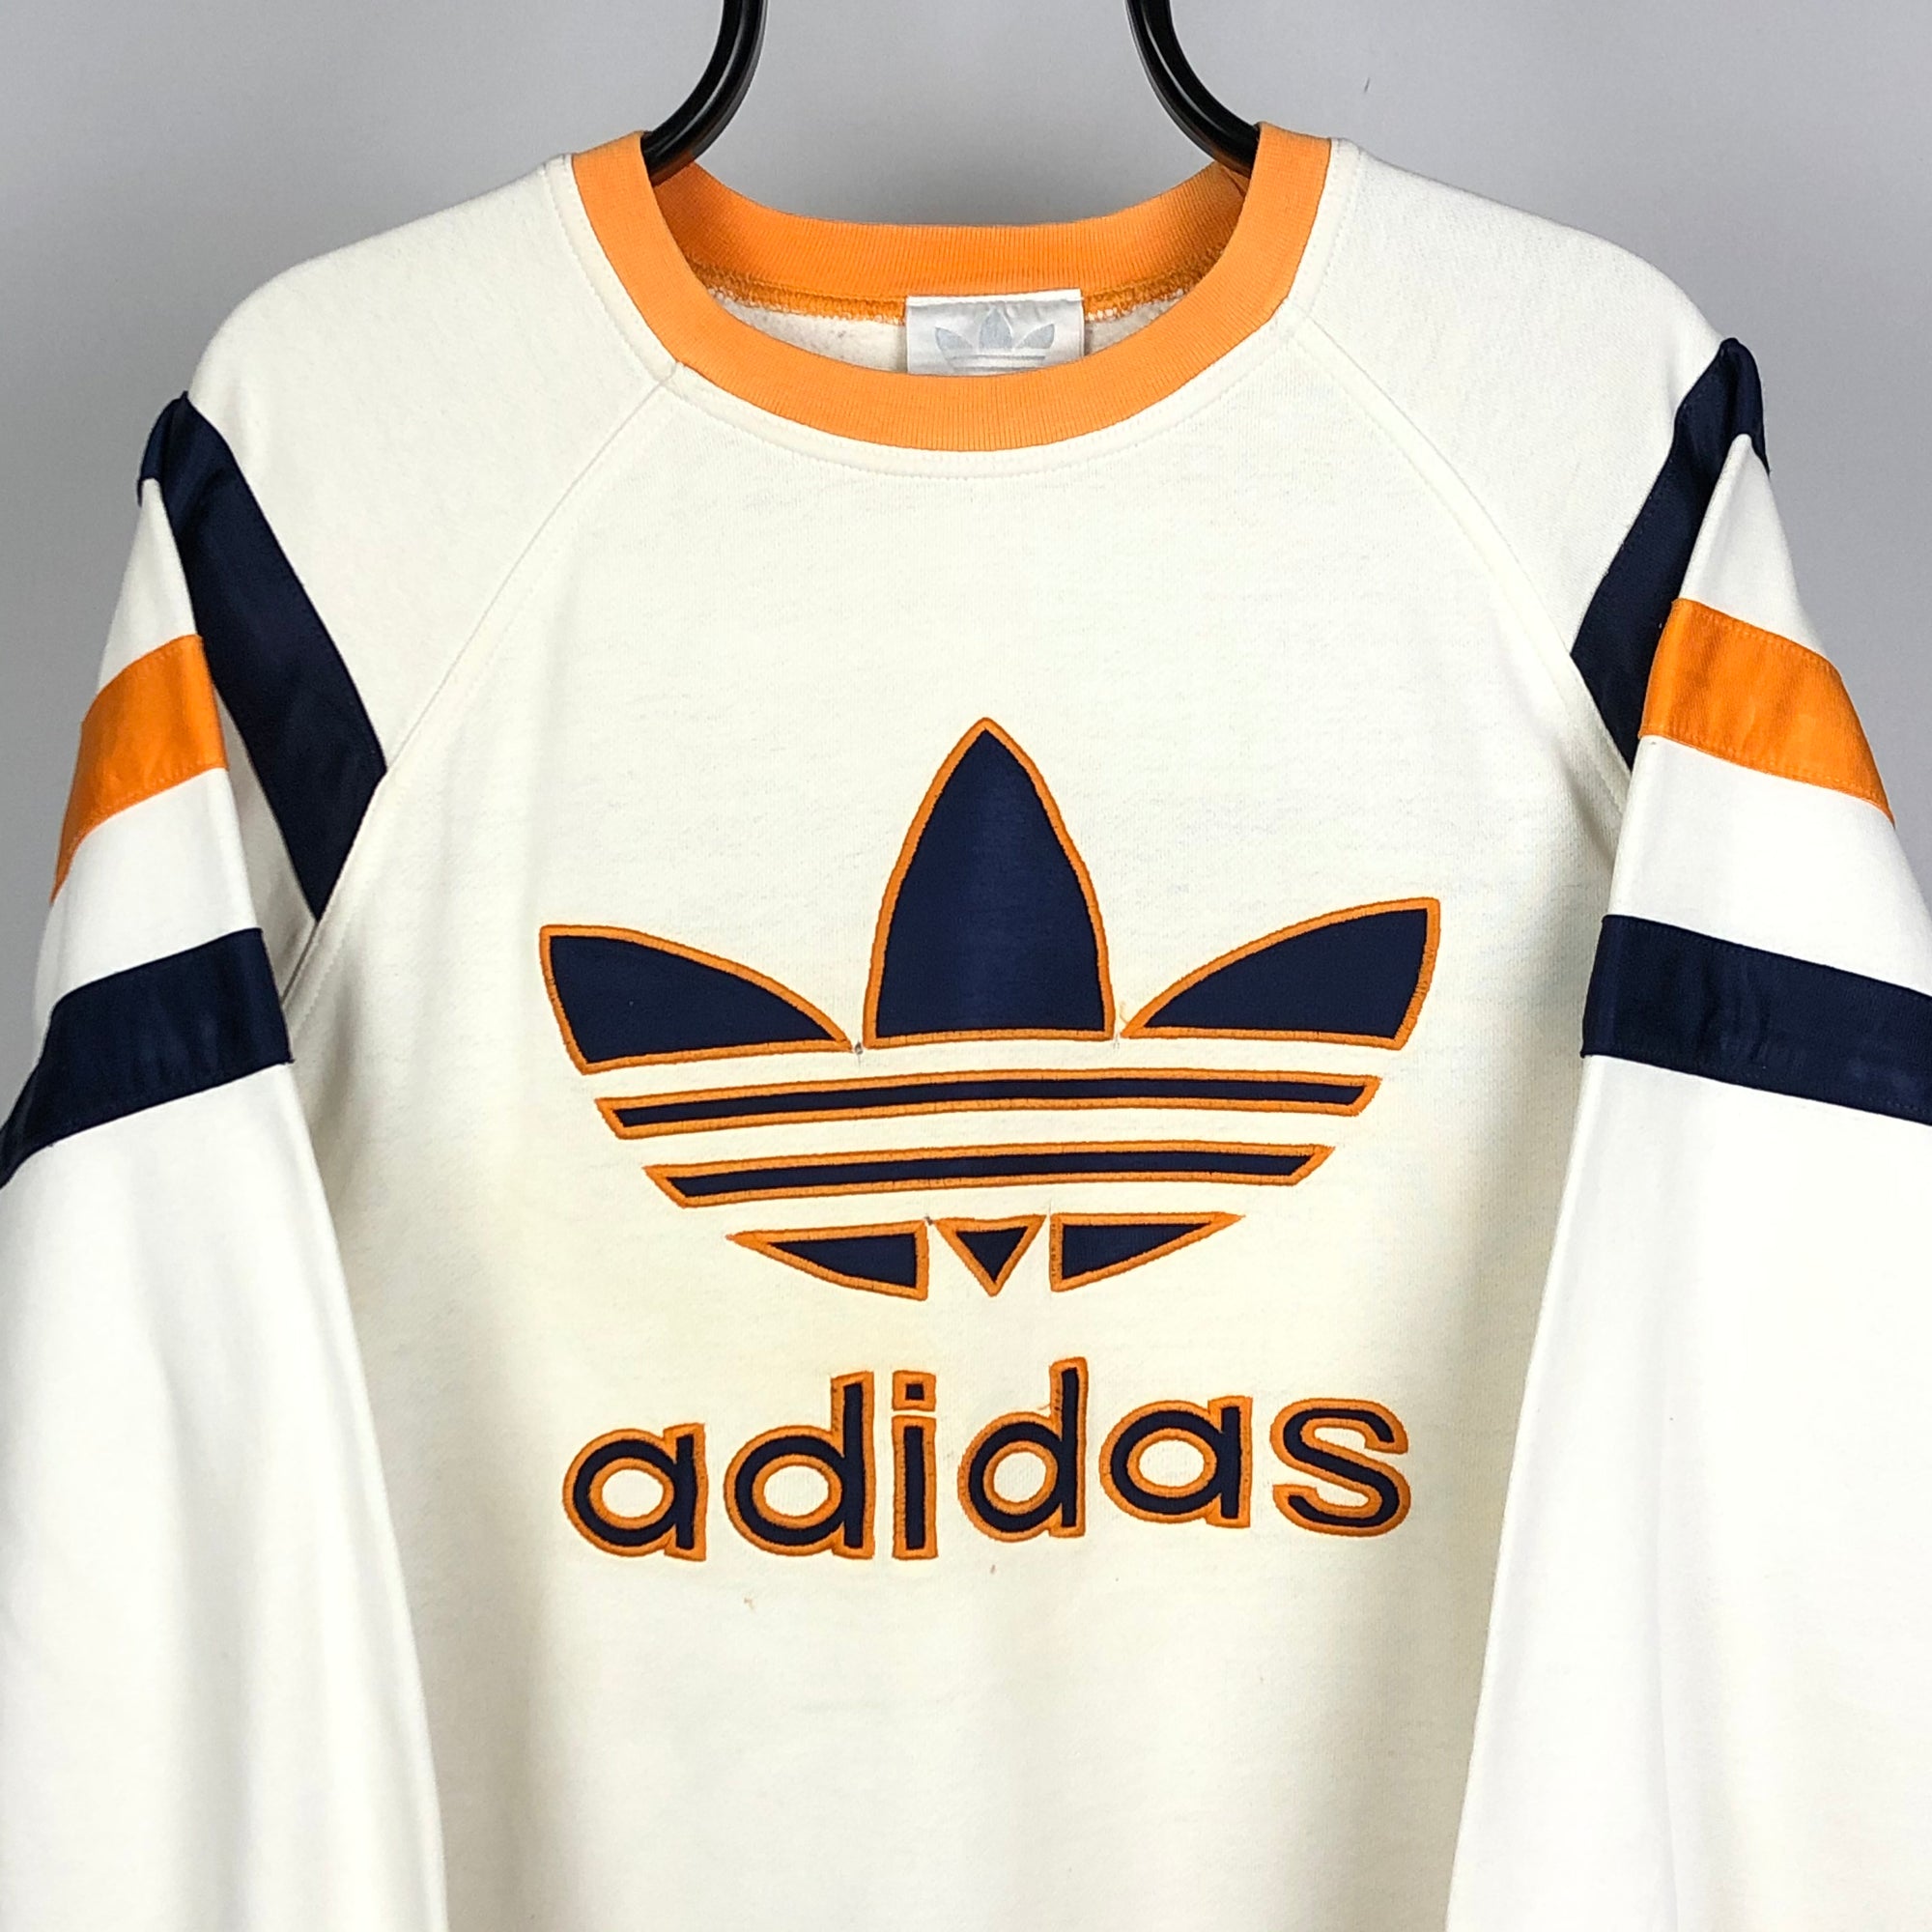 Vintage Adidas Spellout Sweatshirt in White/Orange/Navy - Men's Medium/Women's Large